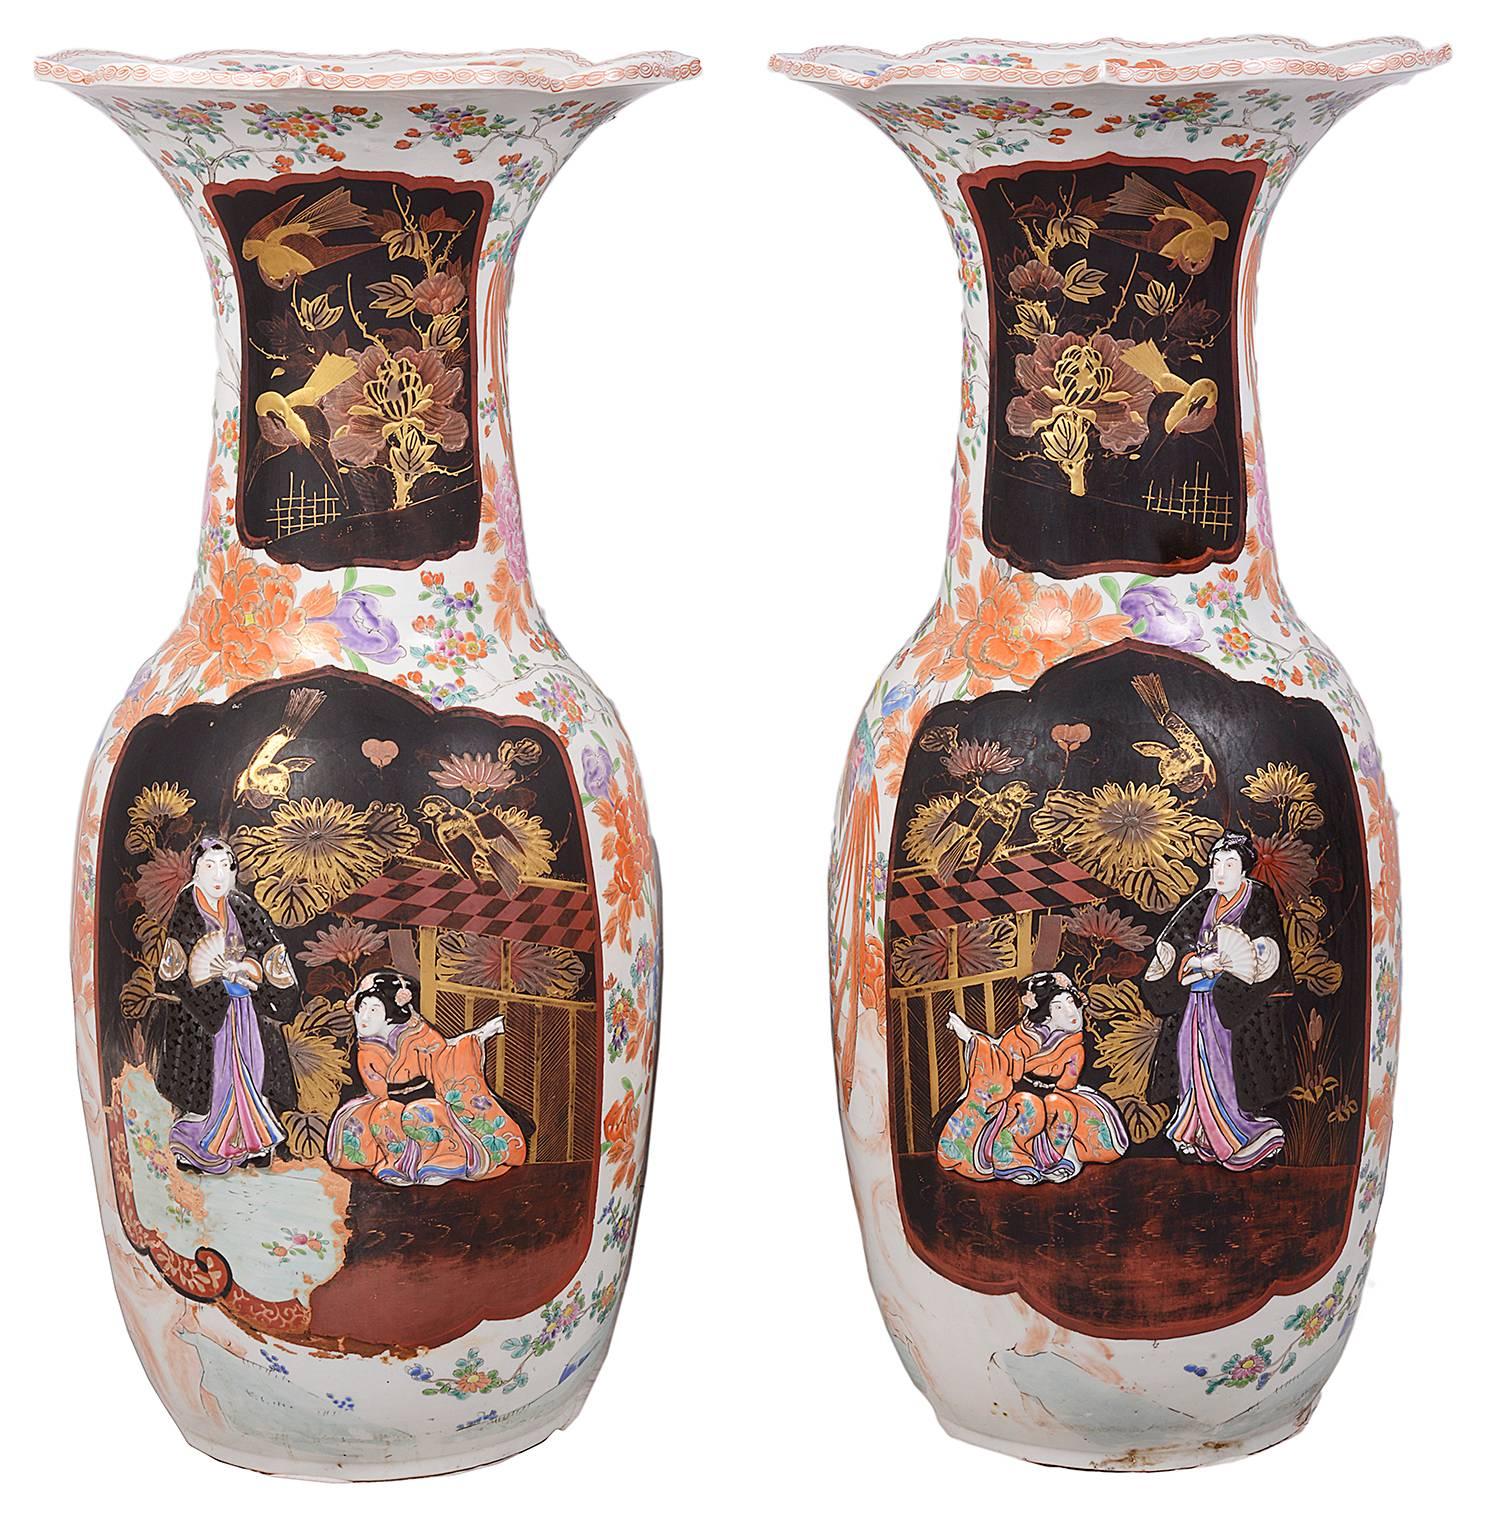 Großes Paar japanischer Arita-Porzellanvasen aus dem 19. Jahrhundert